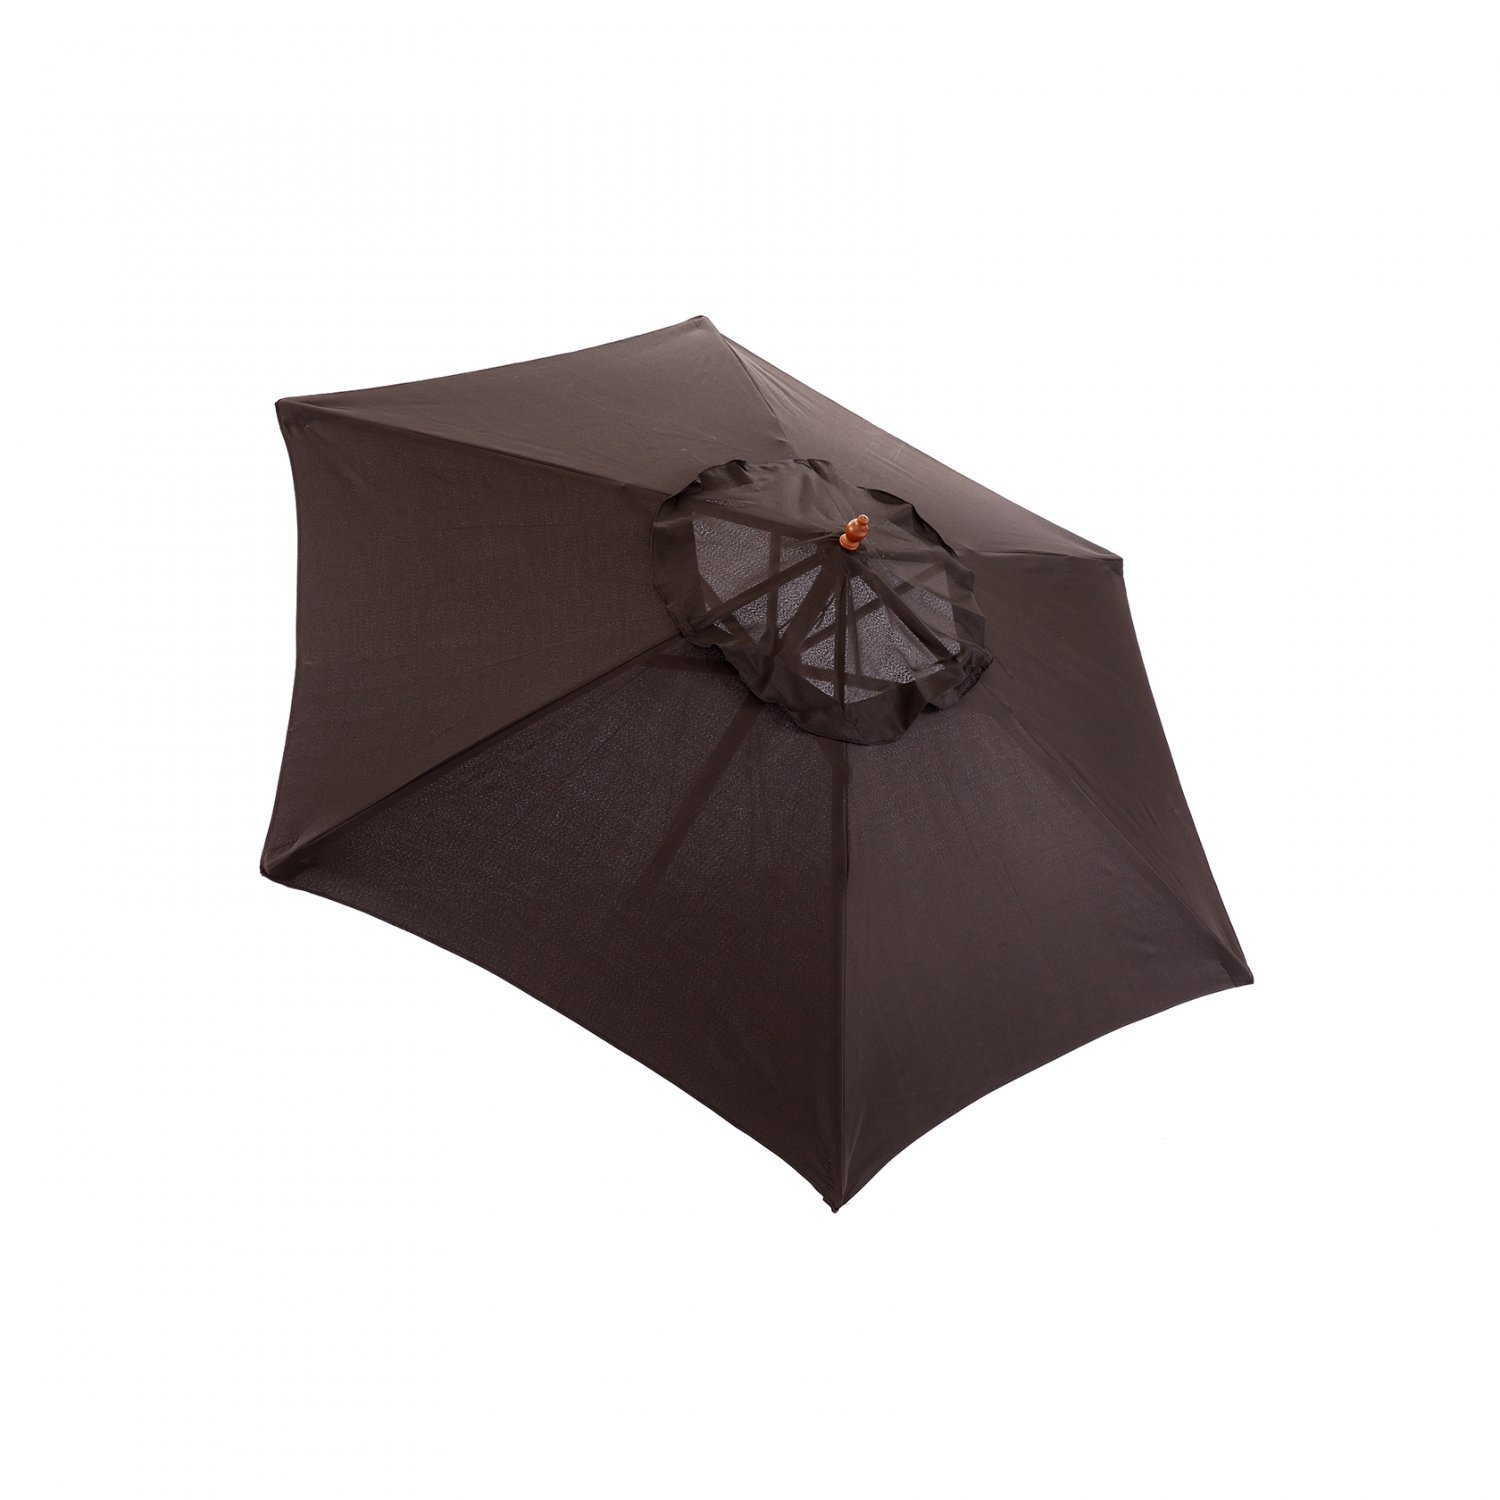 Oypla 2.1m Wooden Black Garden Parasol Outdoor Patio Umbrella Canopy 